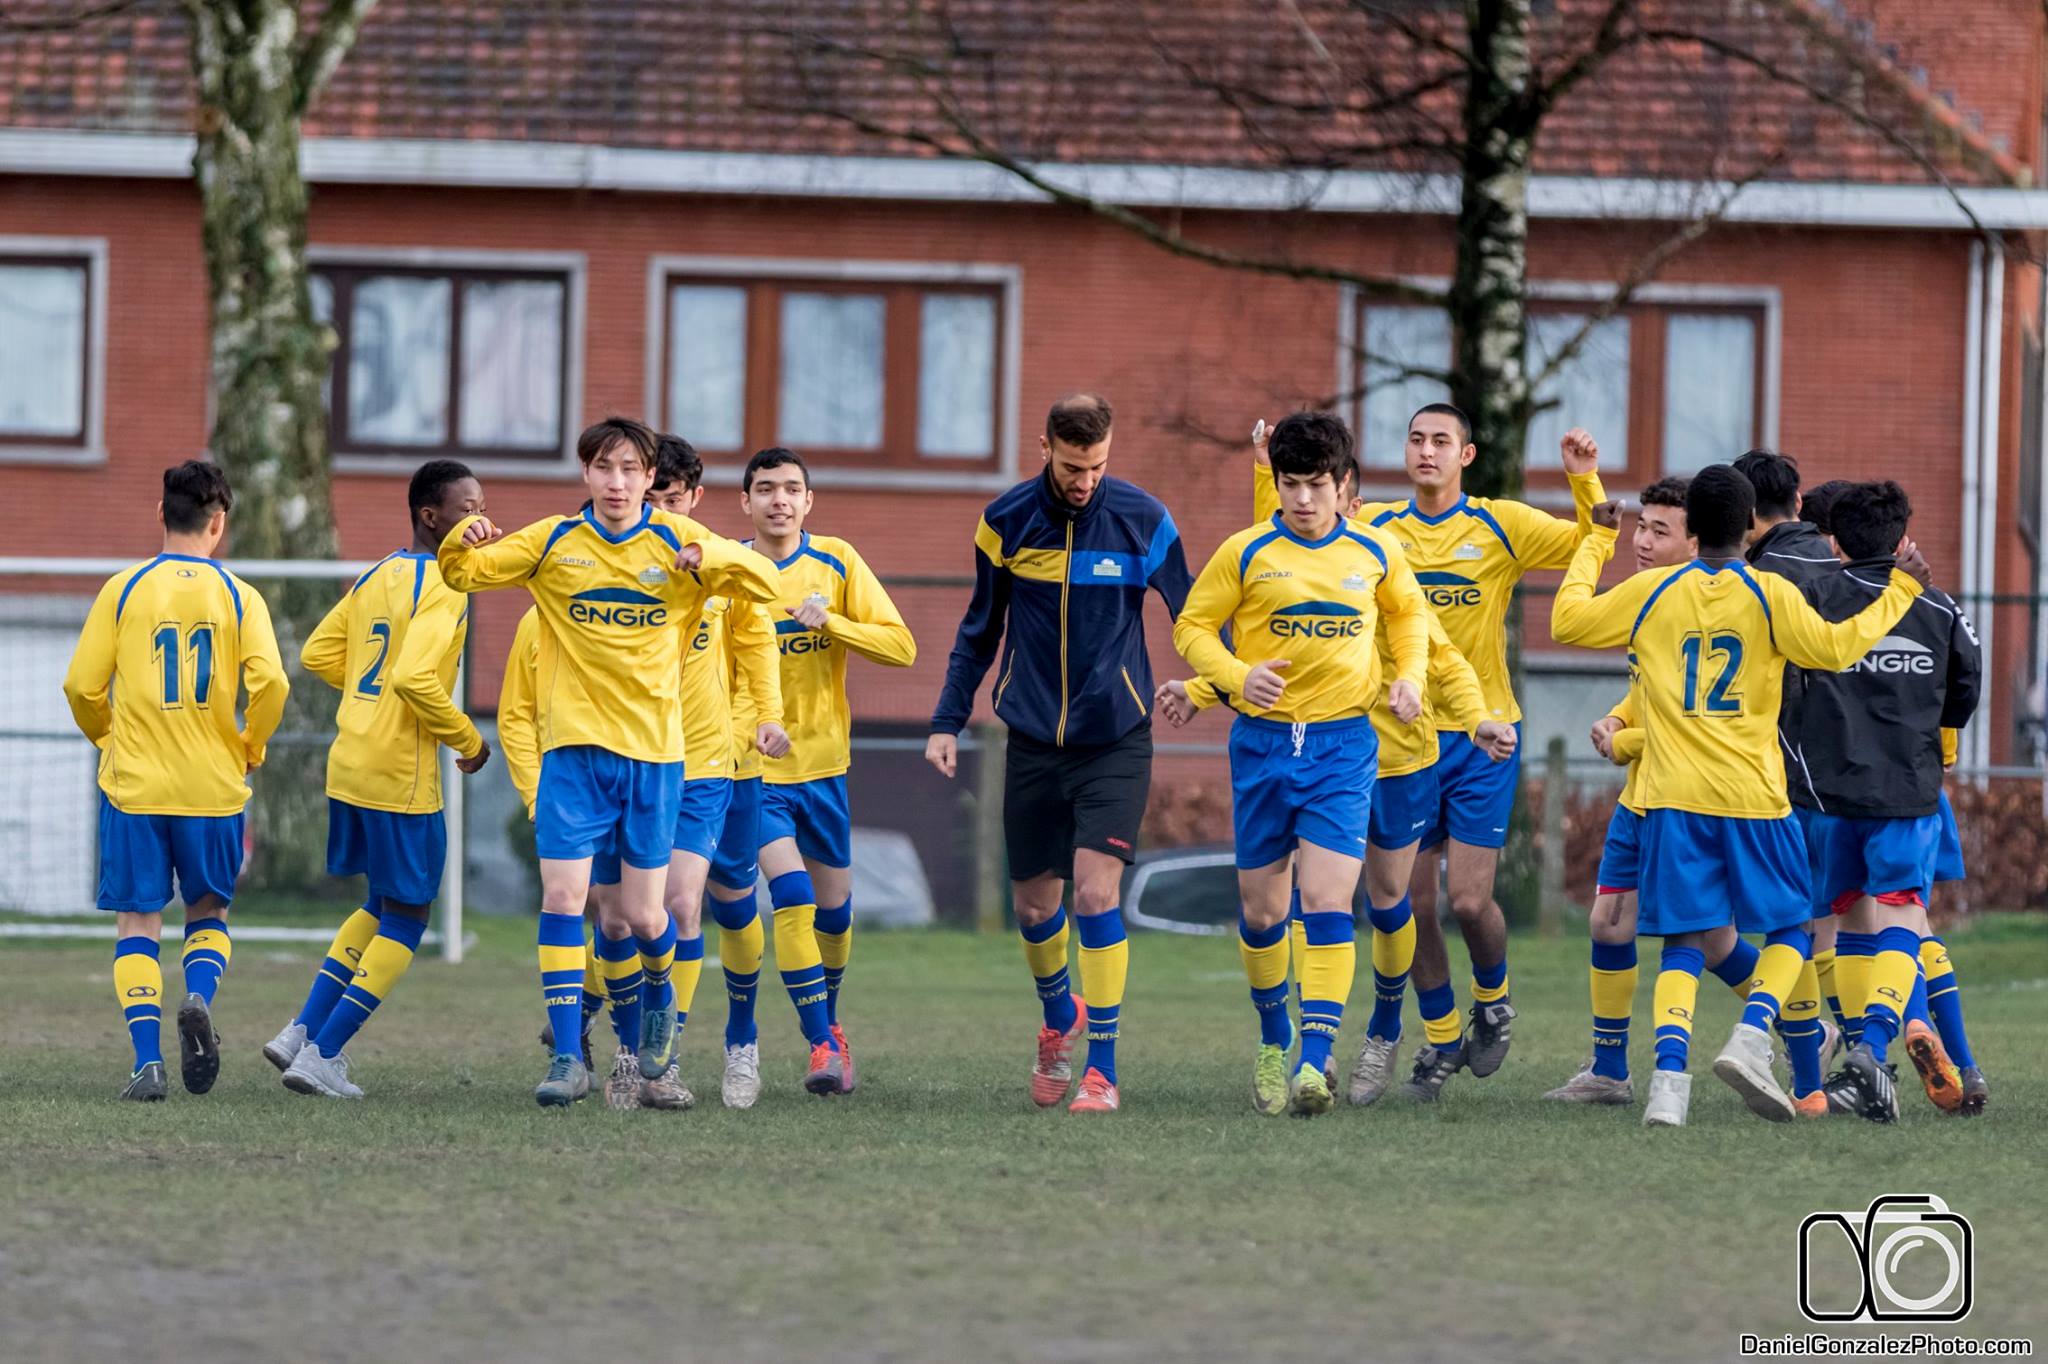 Integration through sport: the experience of Kraainem football club